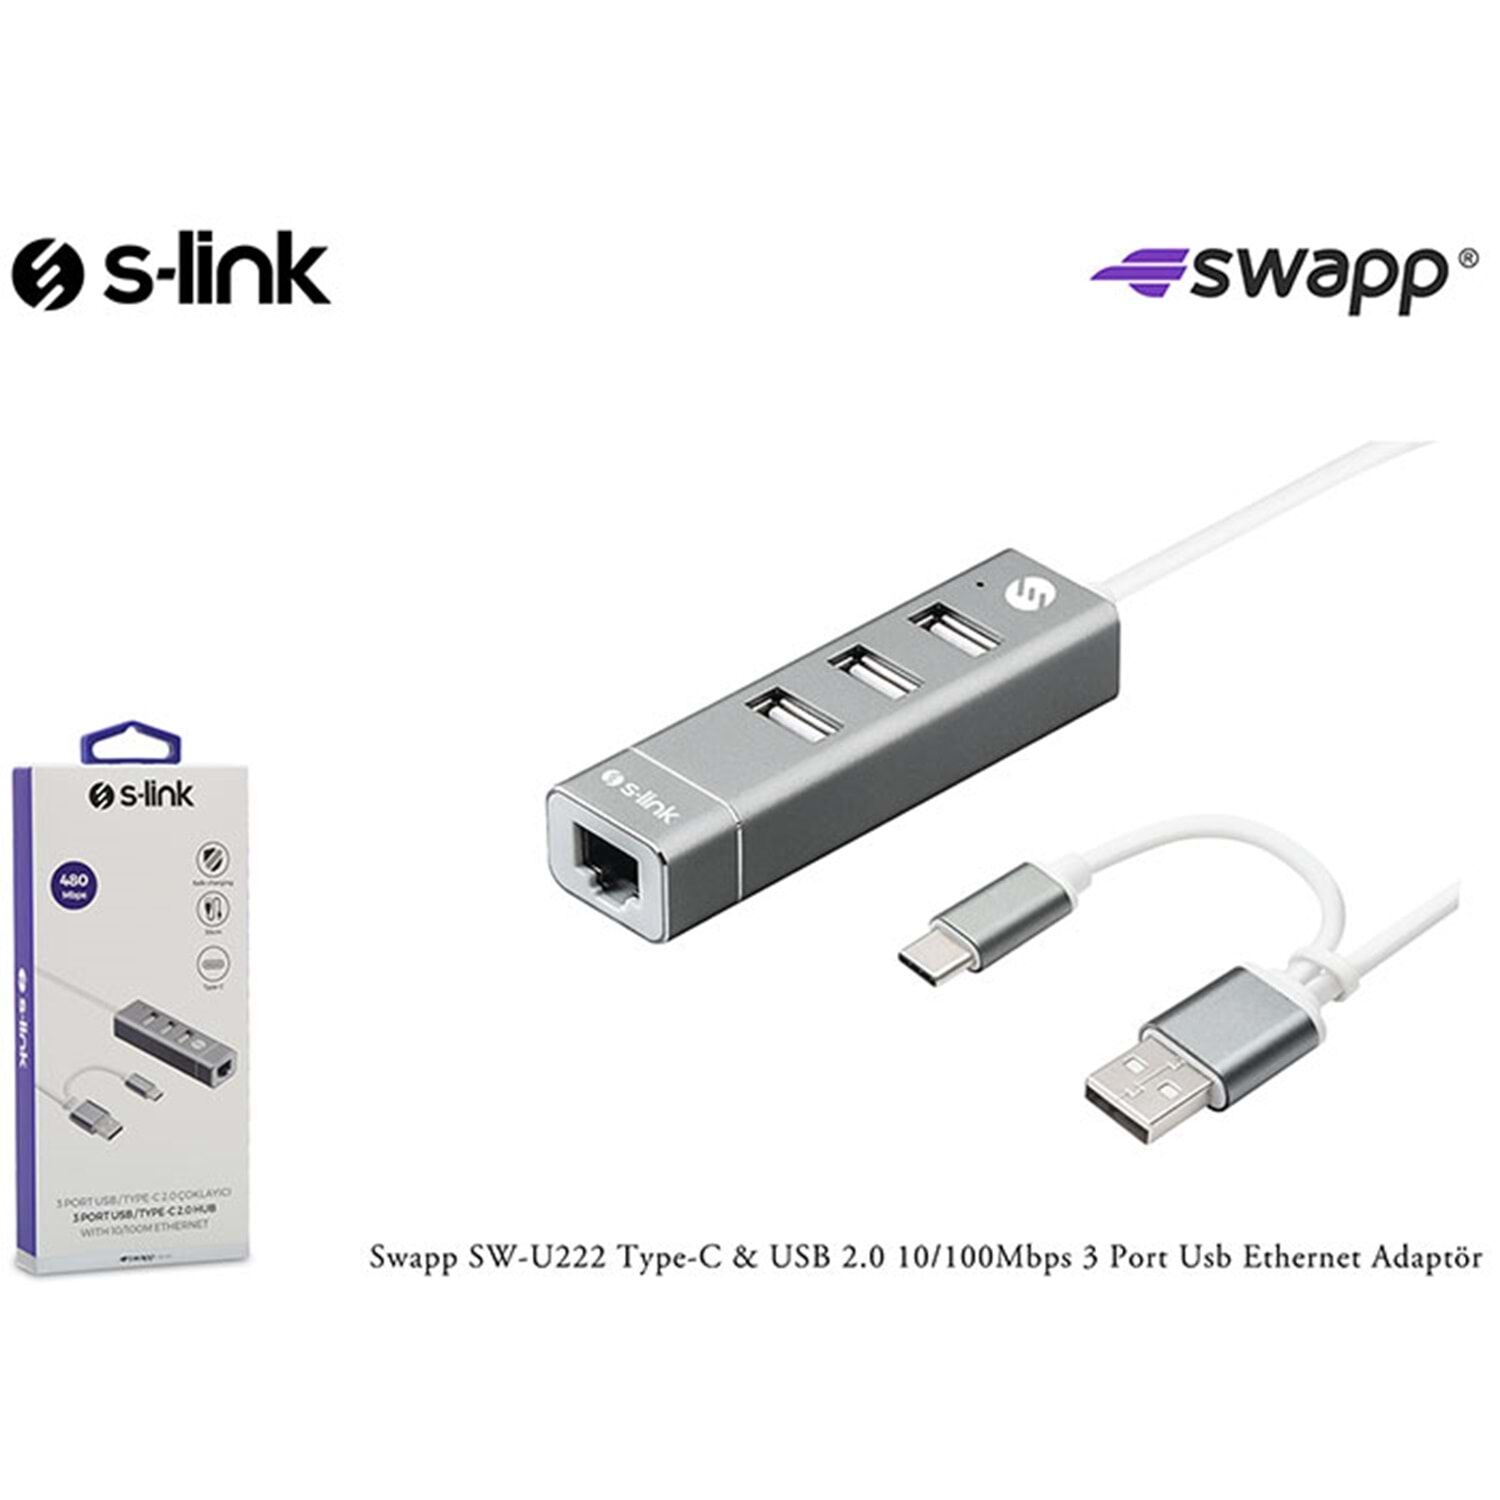 S-link Swapp SW-U222 Type-C Usb 2.0 10/100 Mbps 3 Port Usb Ethernet Adaptör